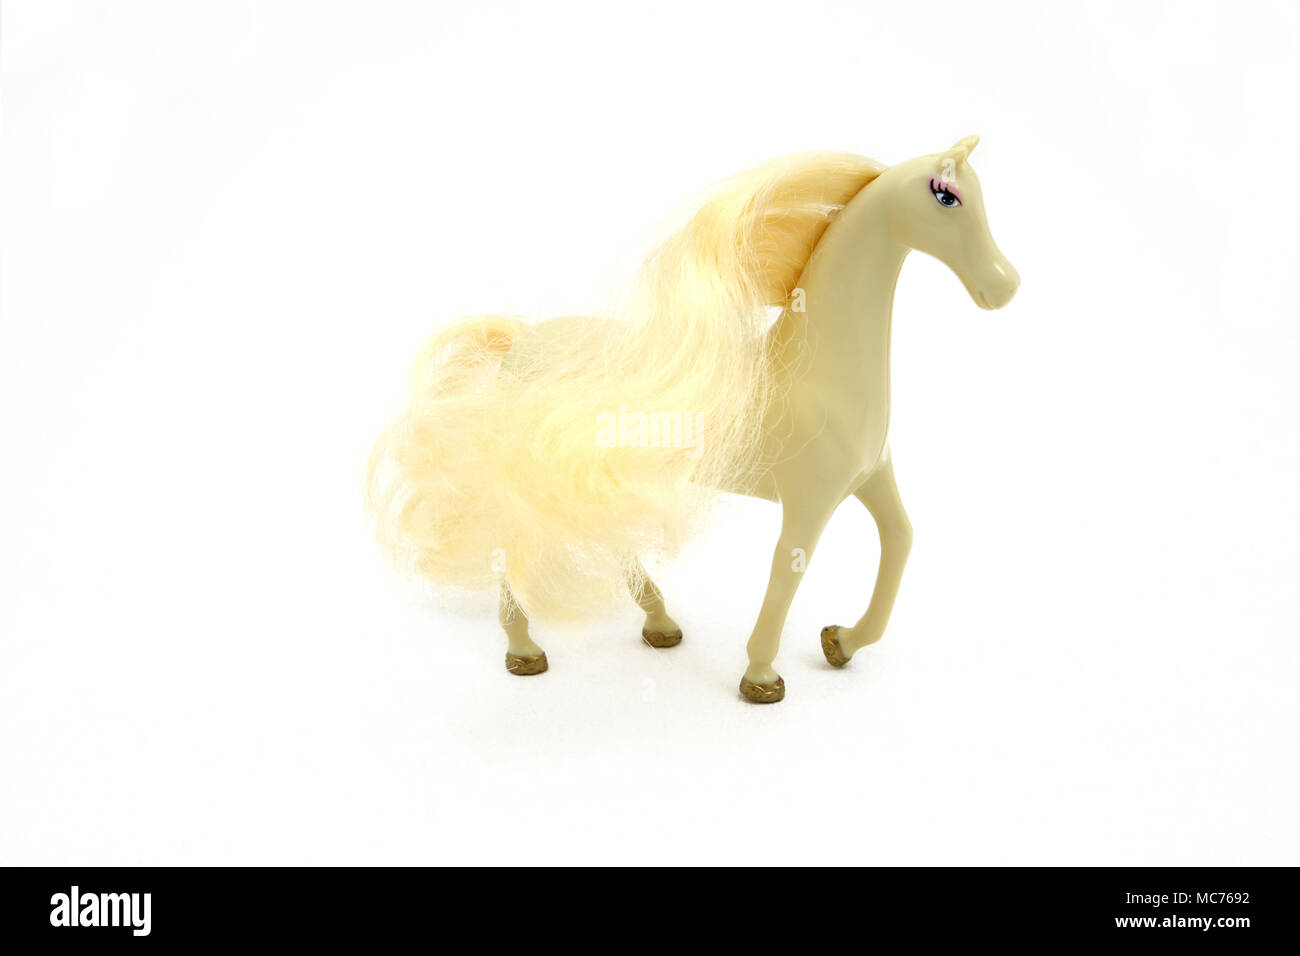 Disney's Horse Simba Toy Stock Photo